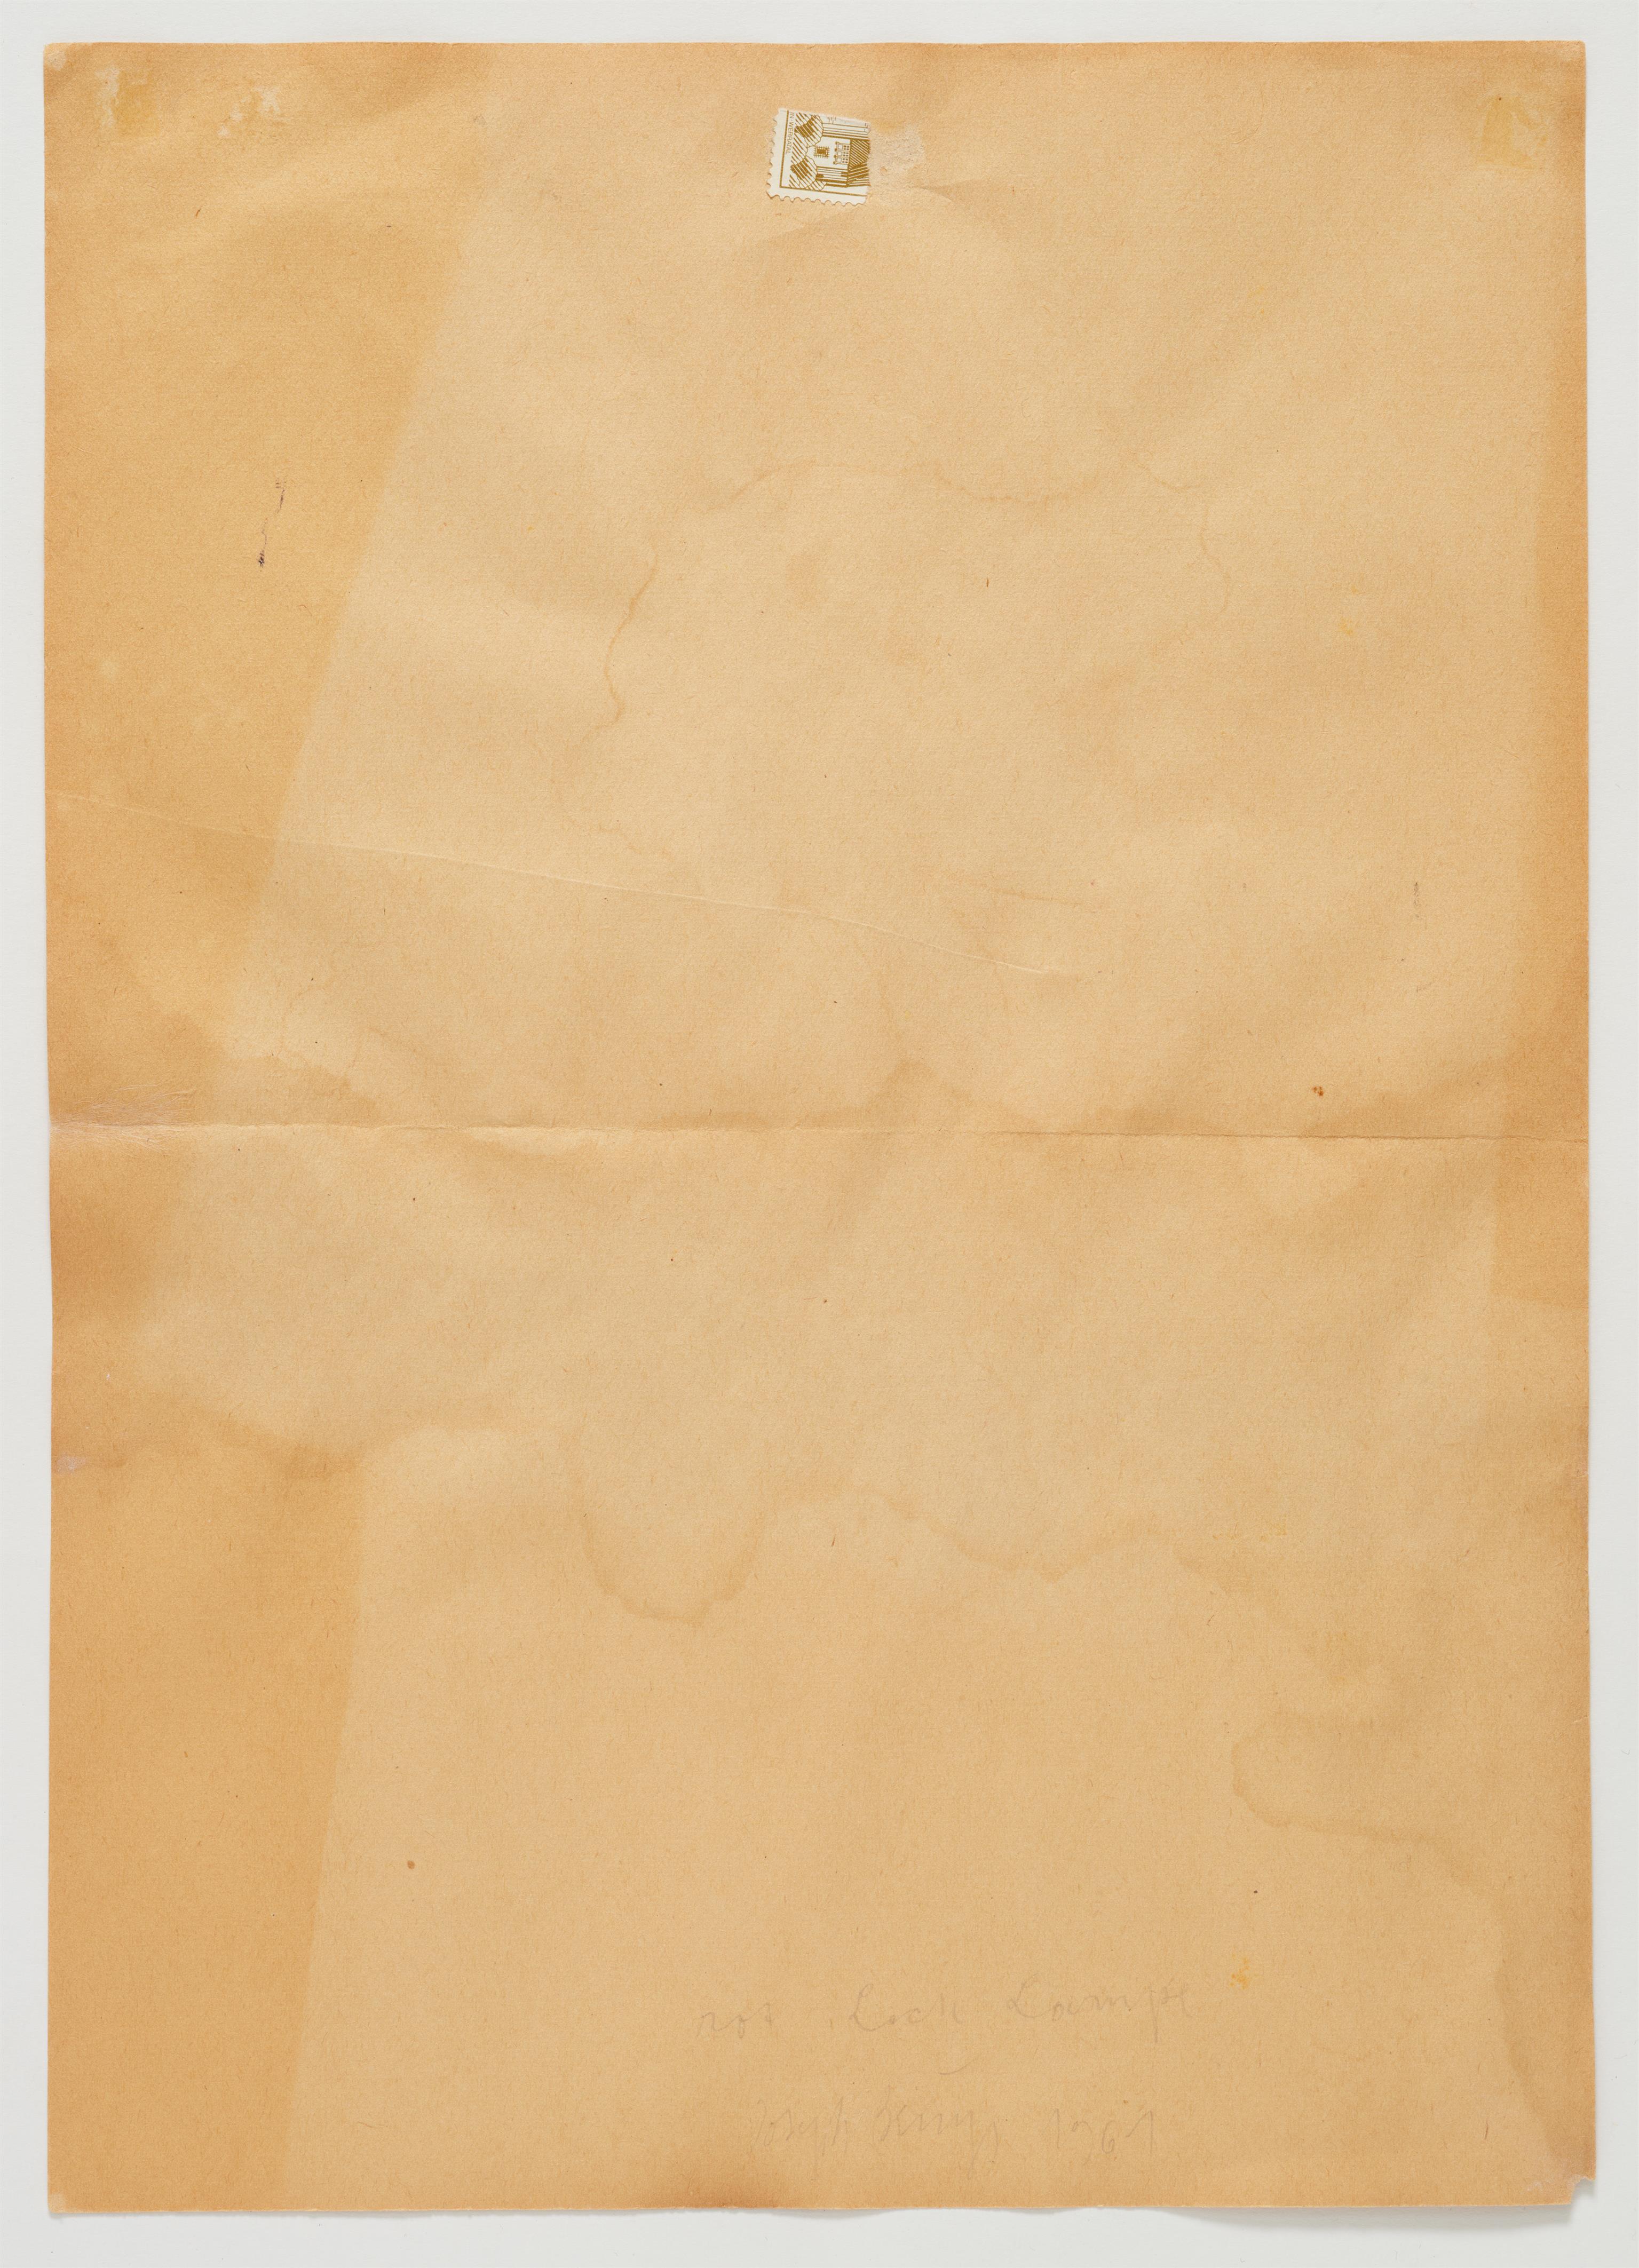 Joseph Beuys - Rot, Loch, Lampe - image-2